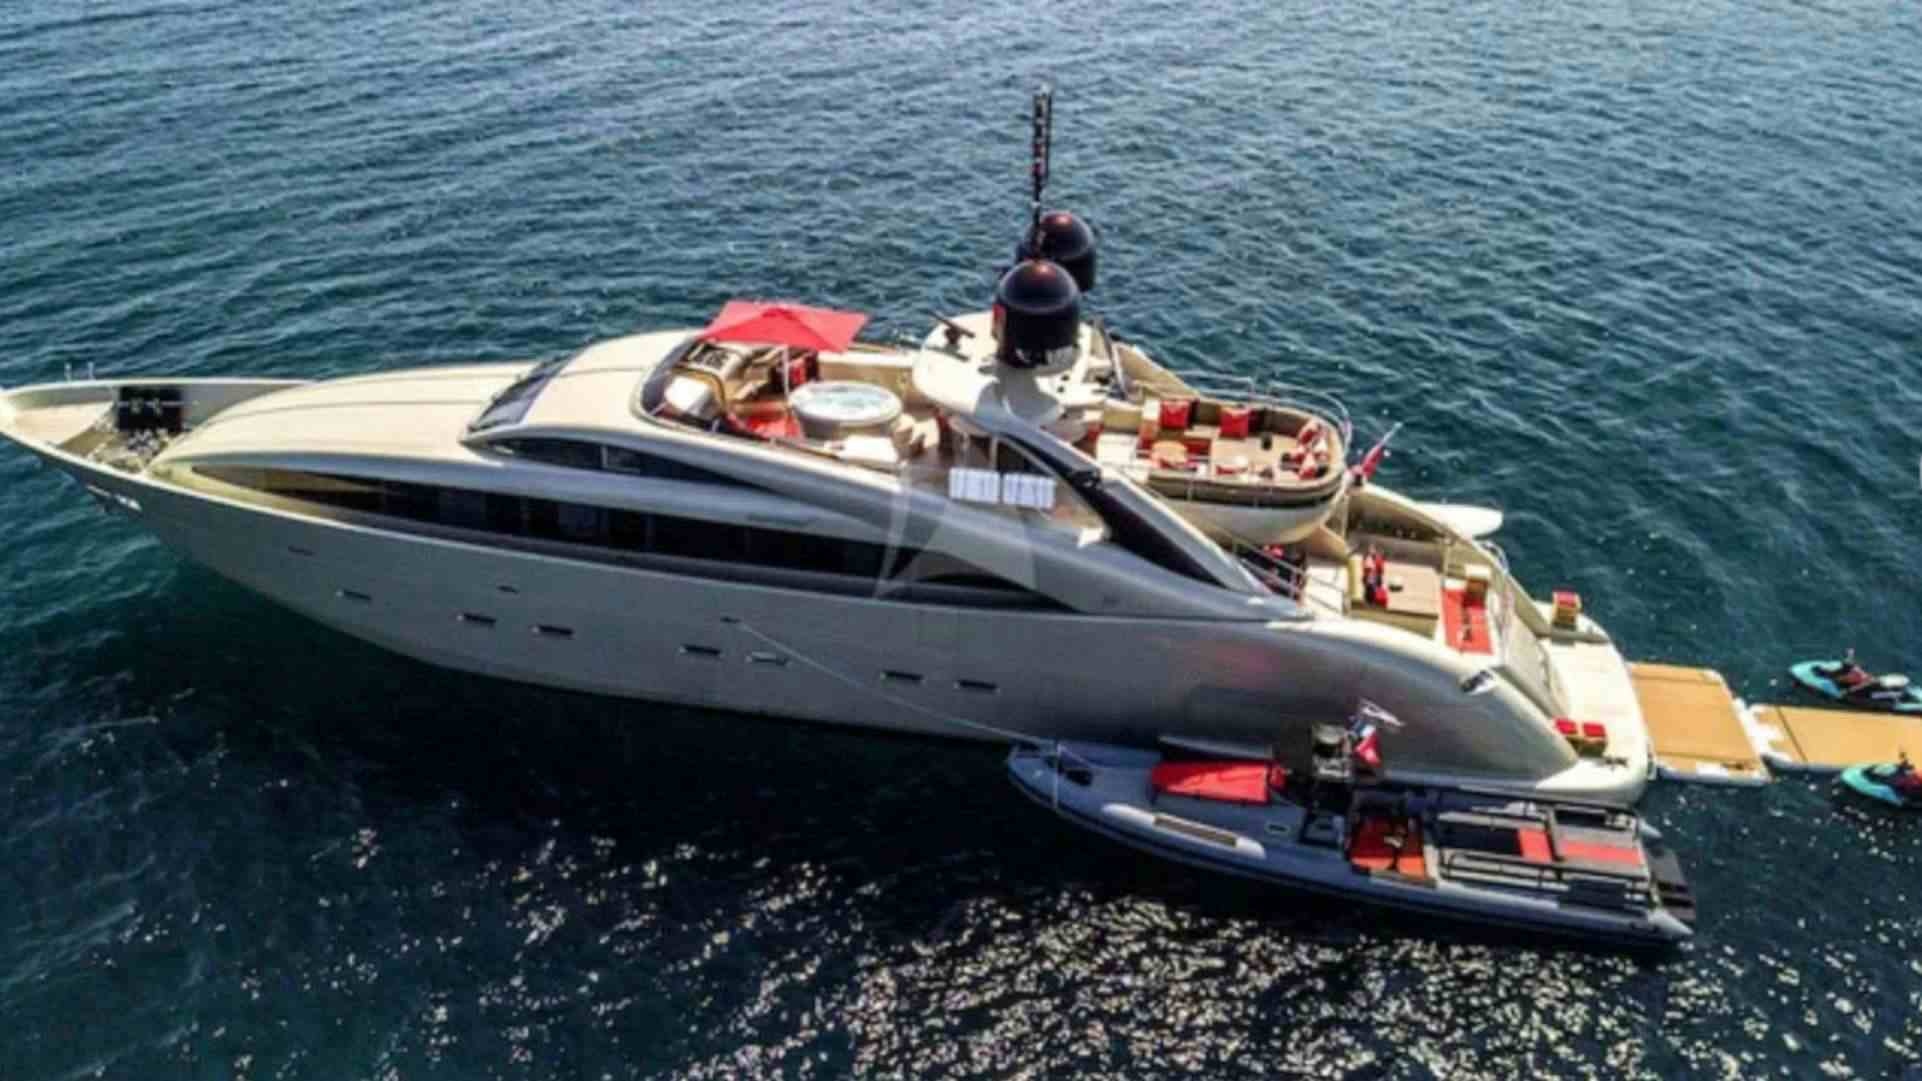 YCM 120 - Motor Boat Charter Spain & Boat hire in Riviera, Corsica, Sardinia, Spain, Balearics, Caribbean 1